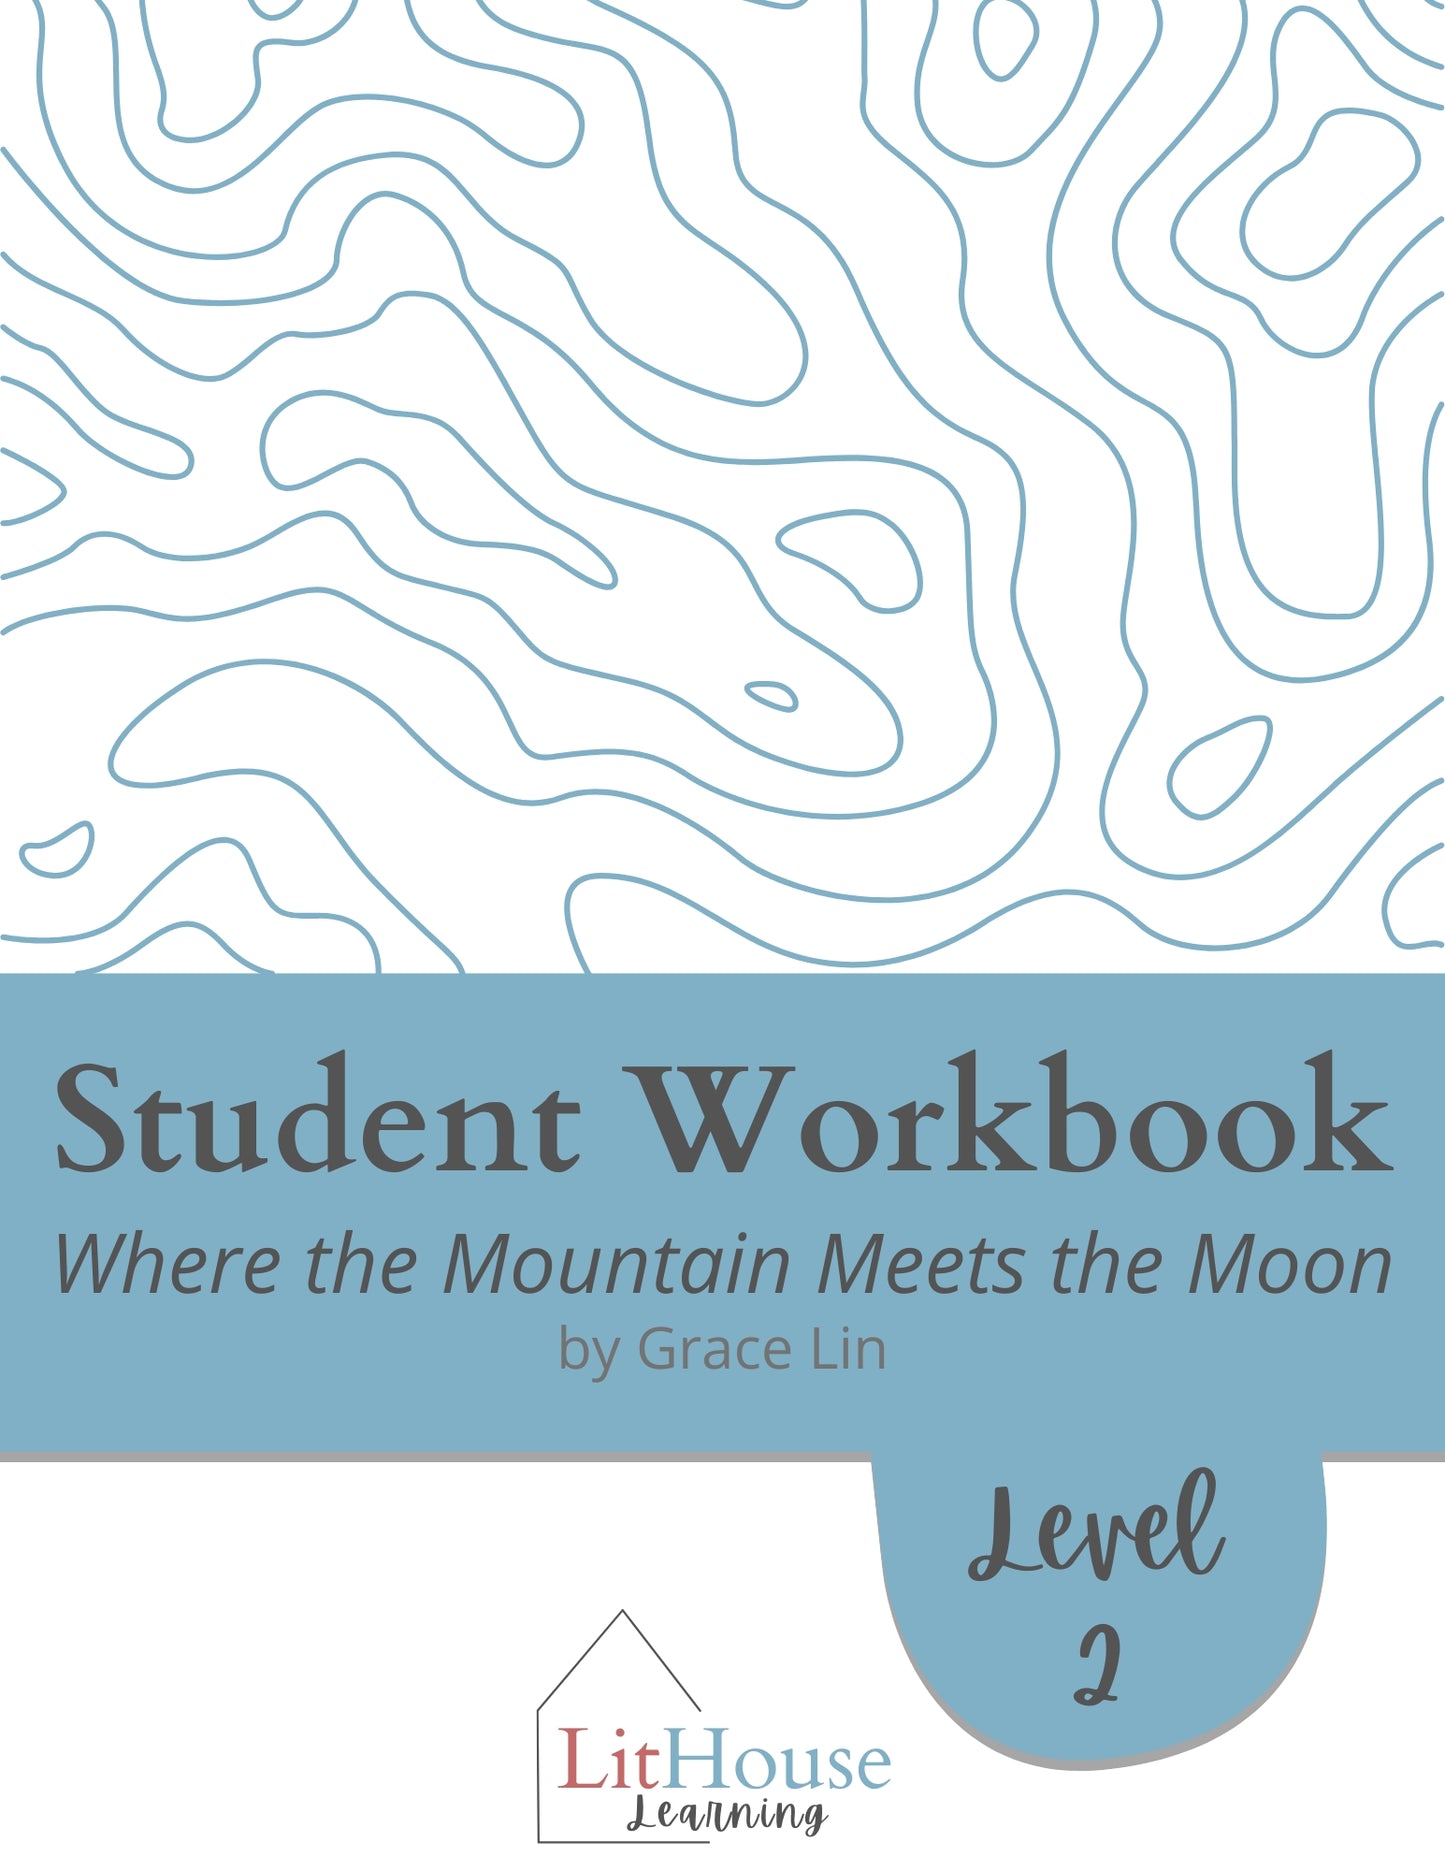 Where the Mountain Meets the Moon Novel Study